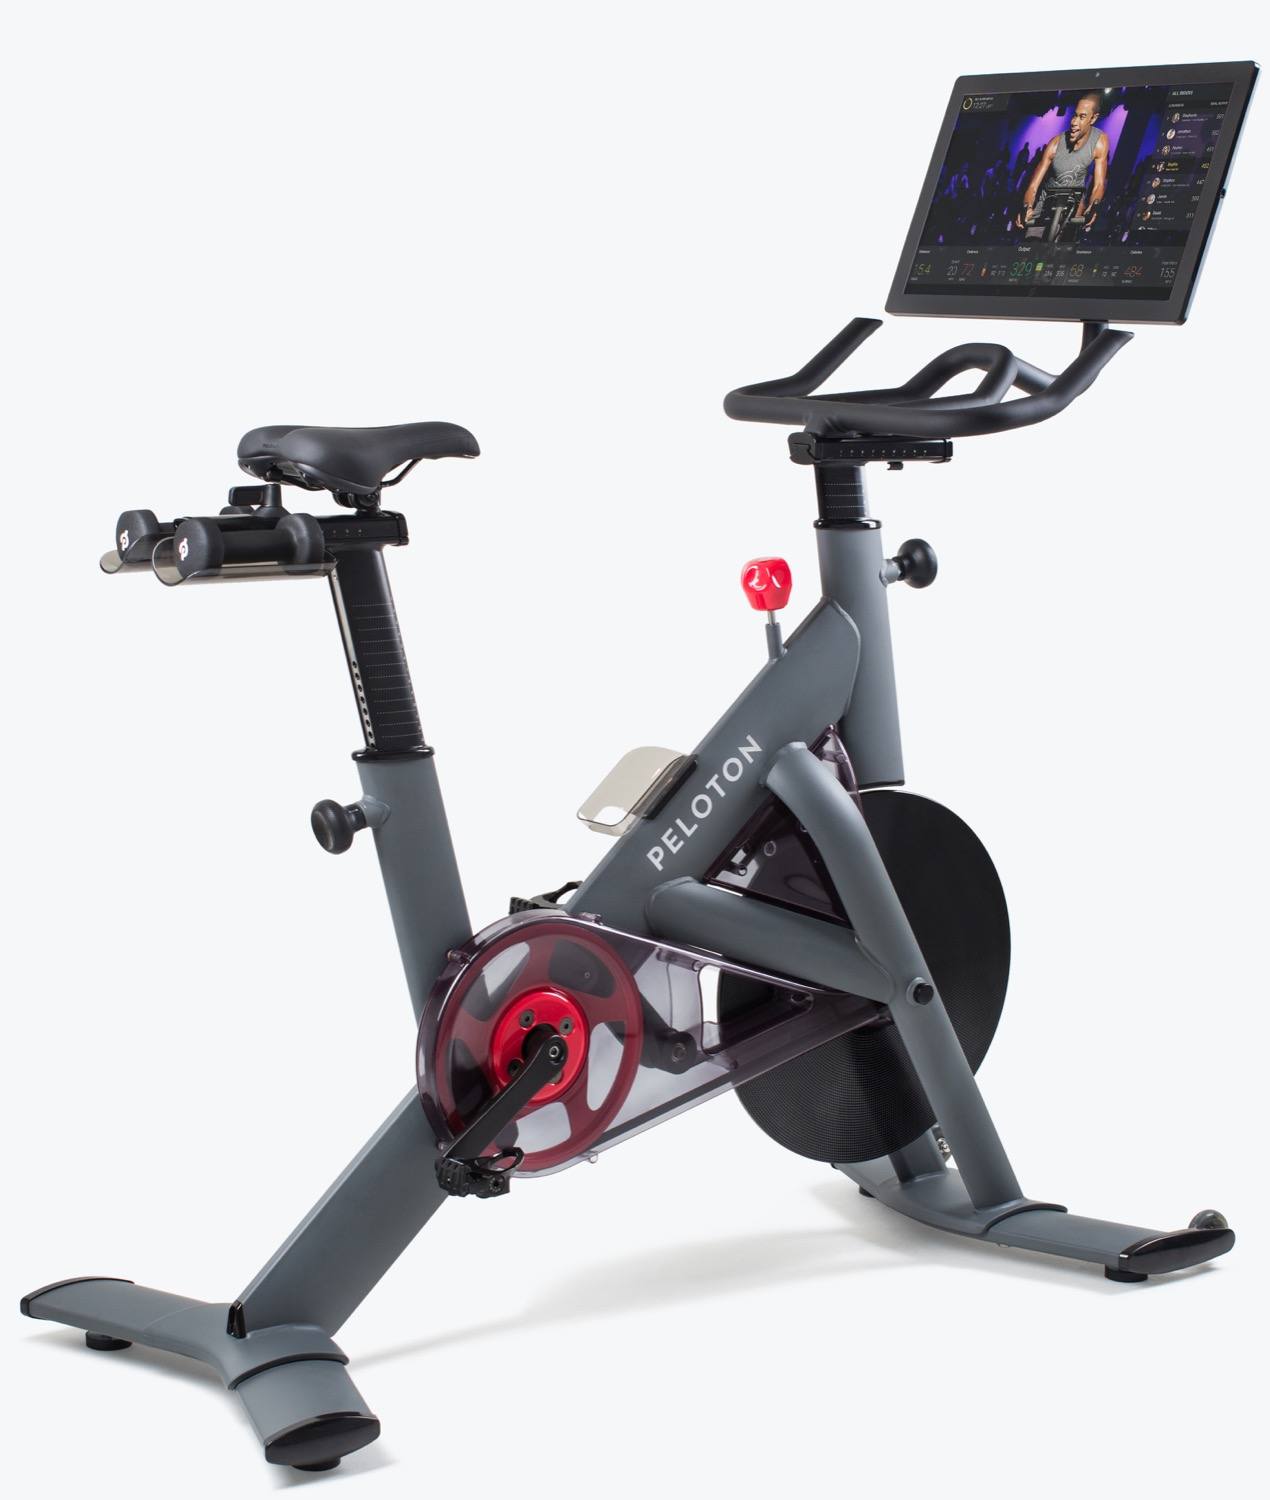 Peloton Exercise Bike with HD Display Screen